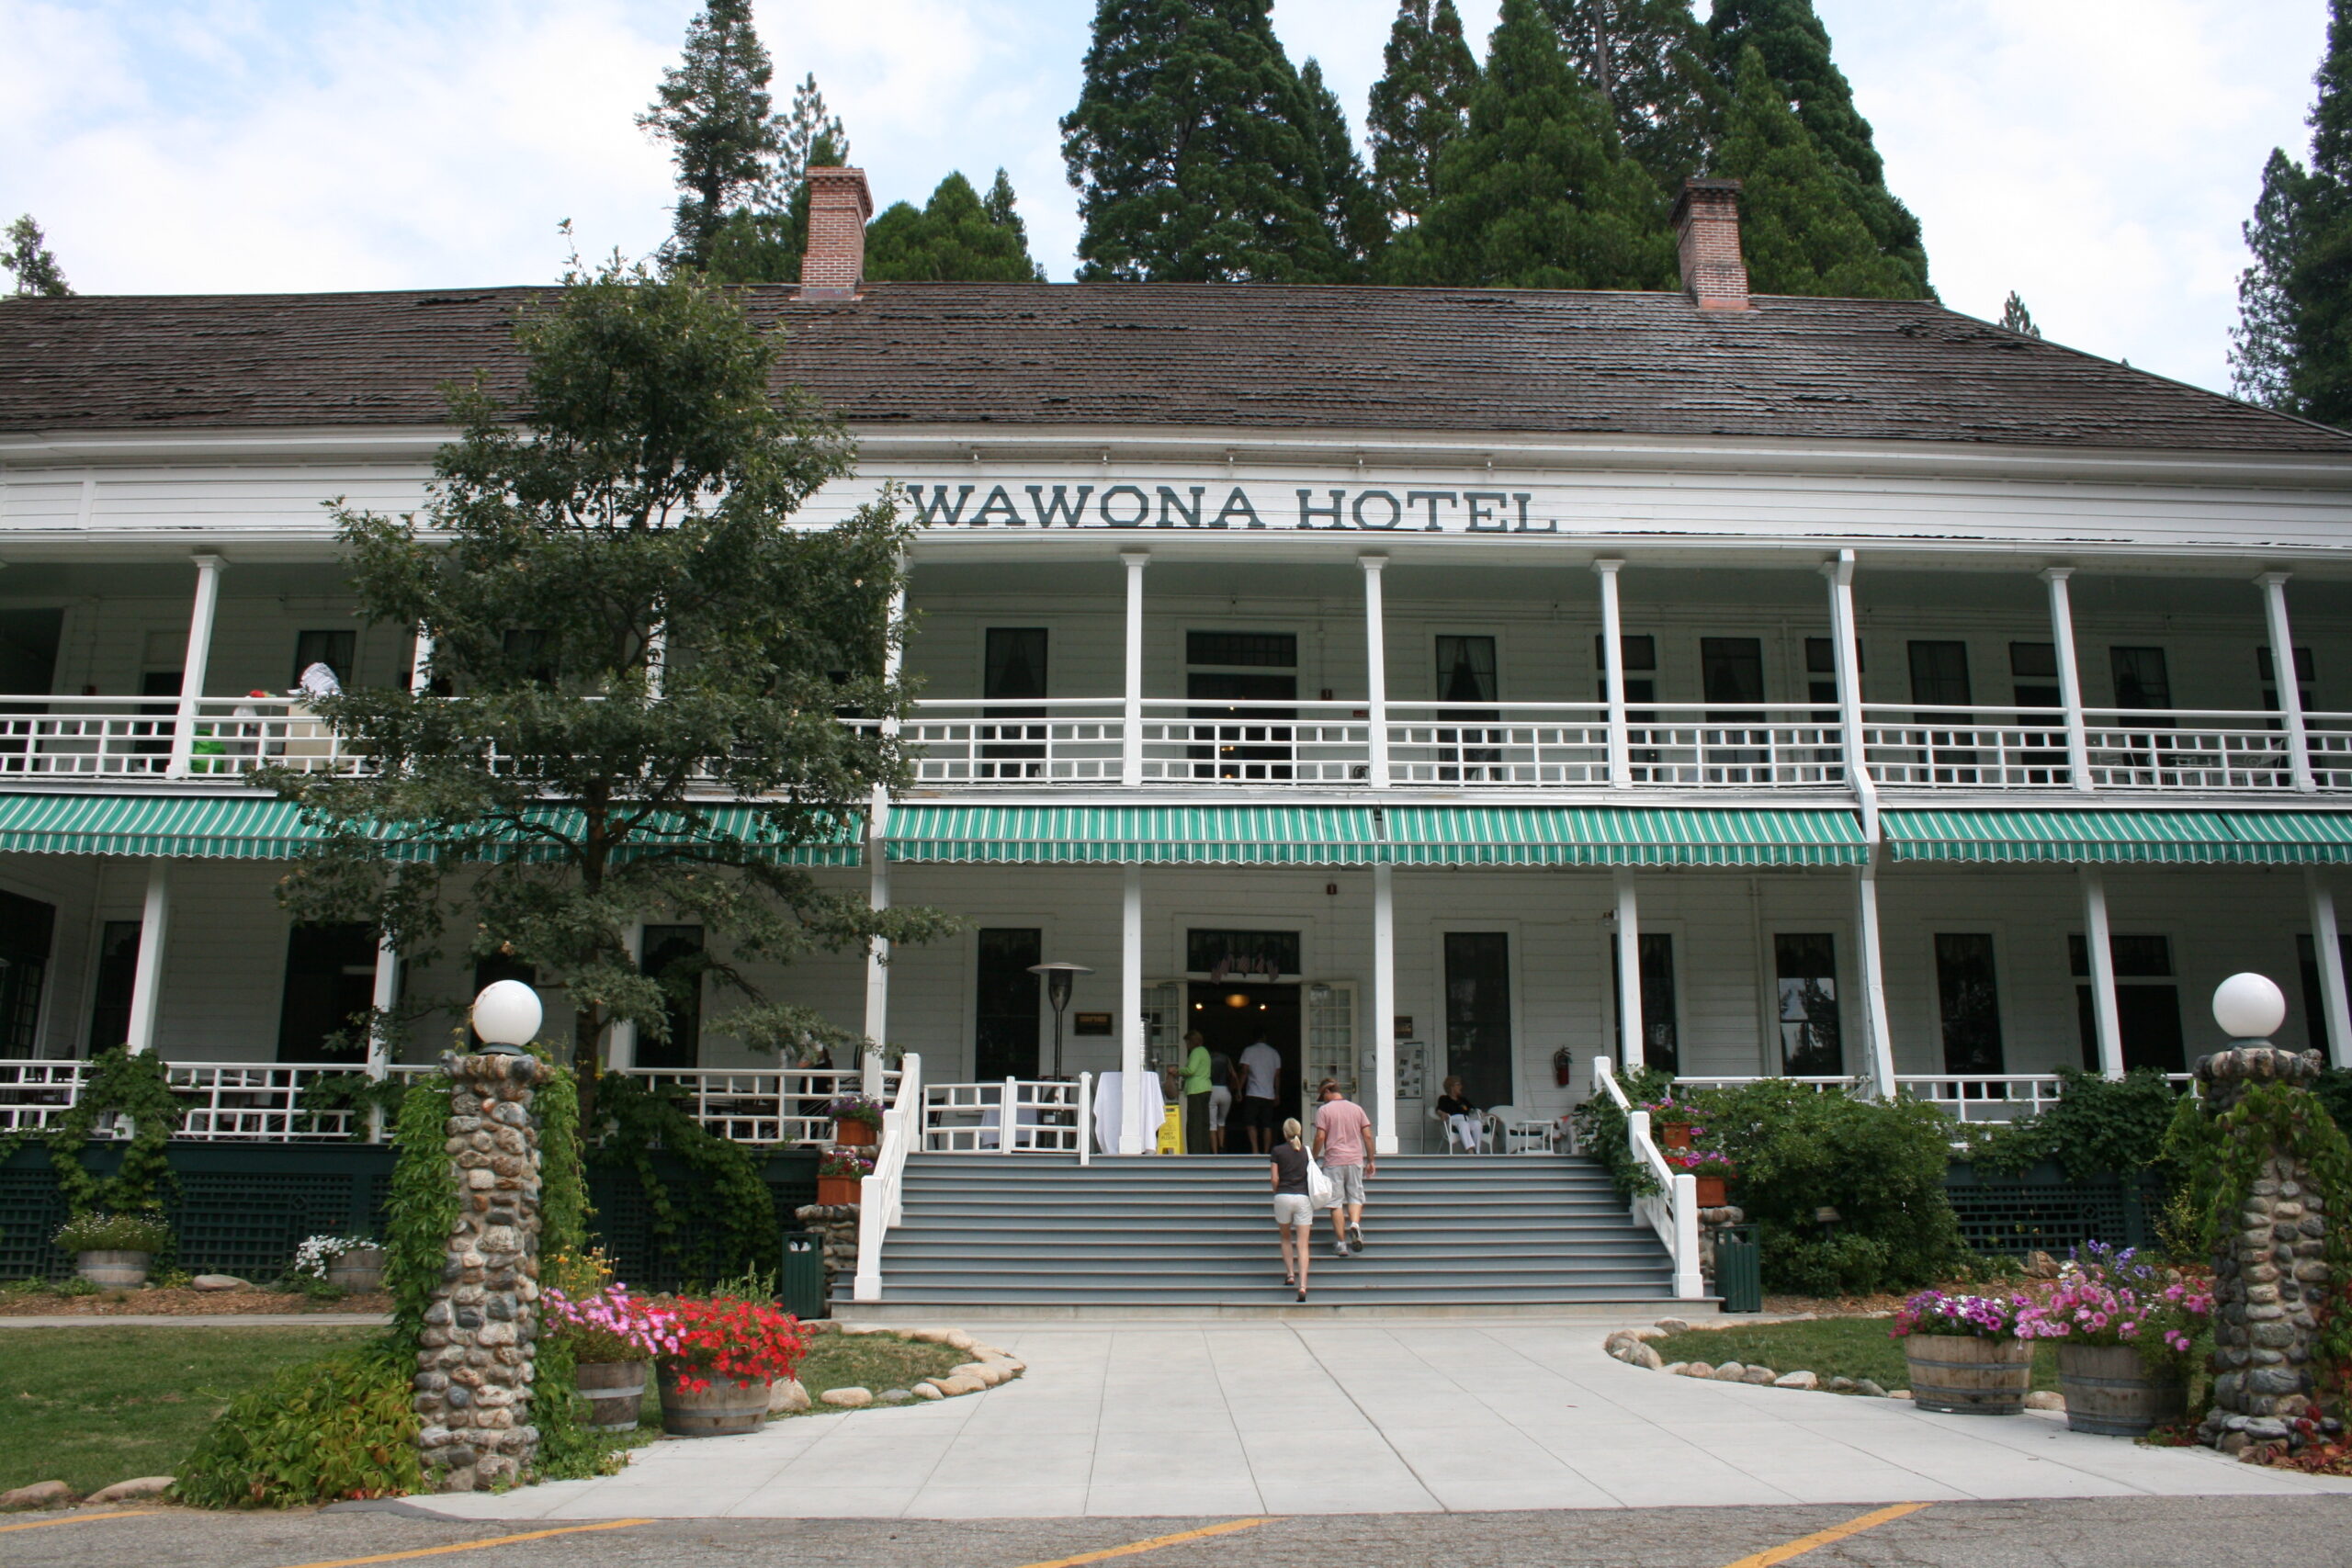 The Wawona Hotel